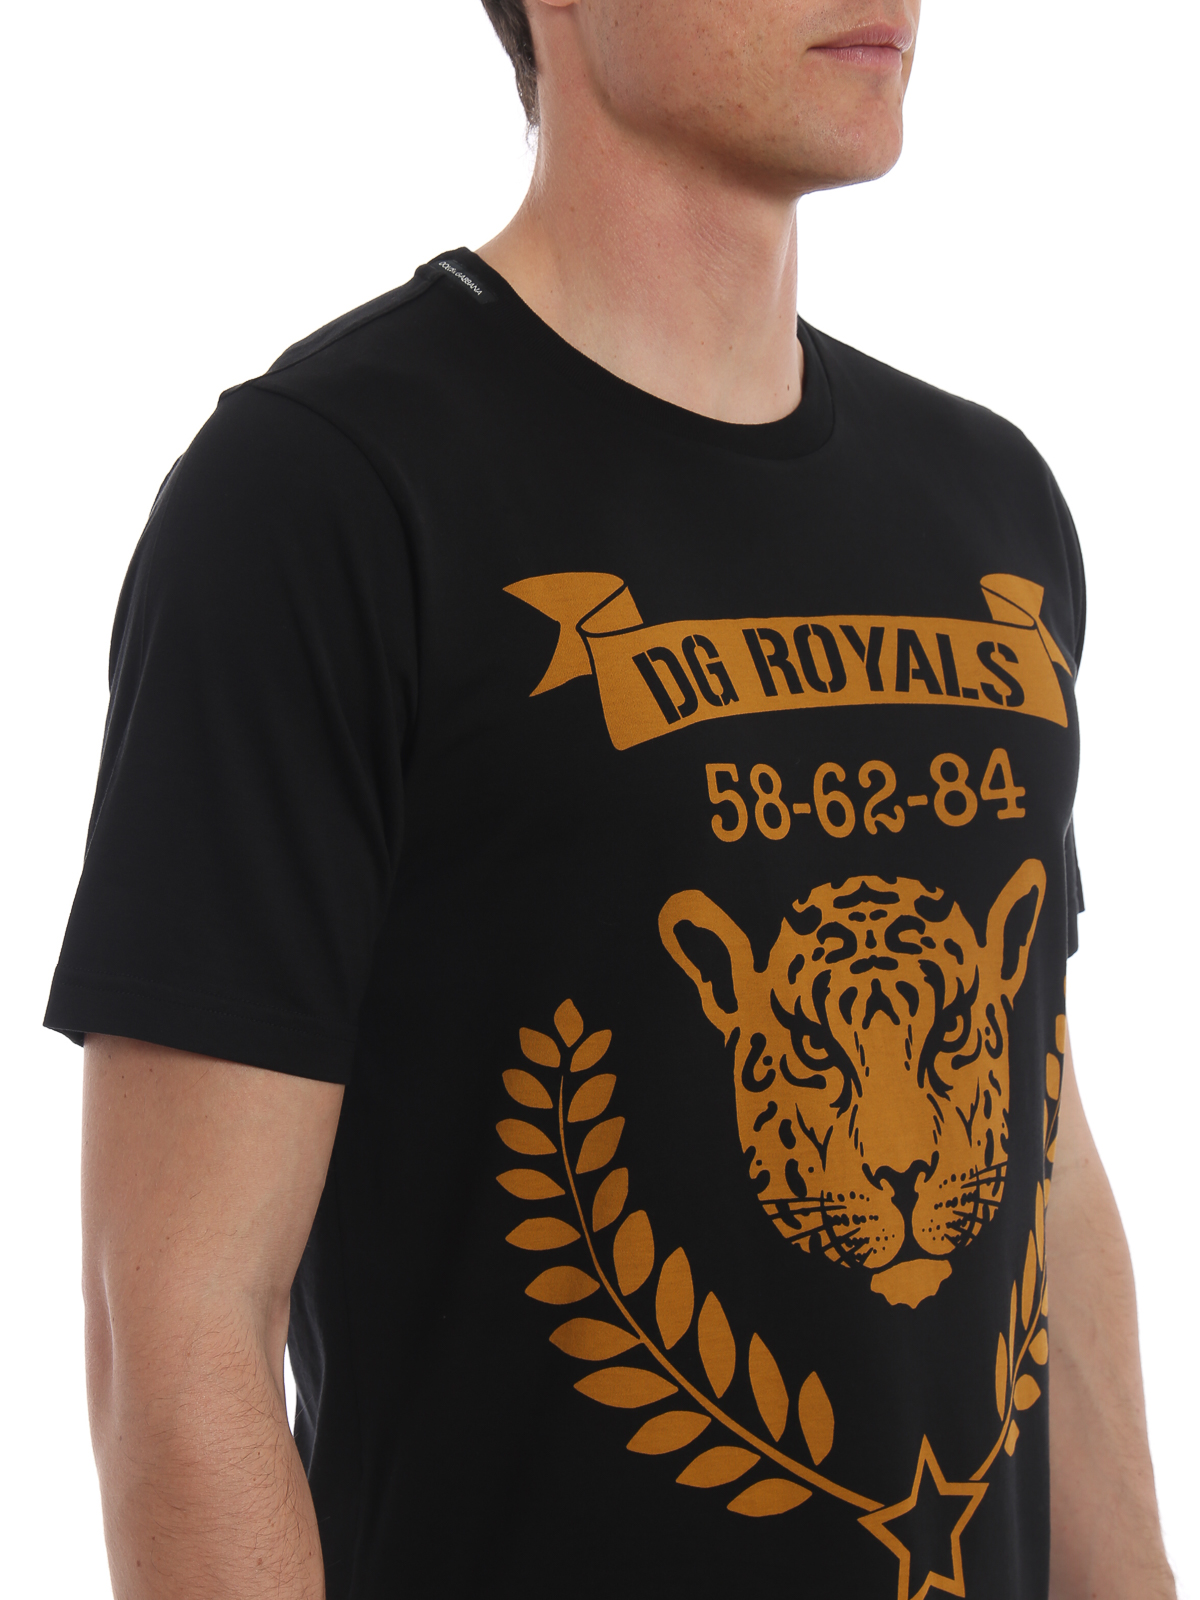 where to buy royals shirts